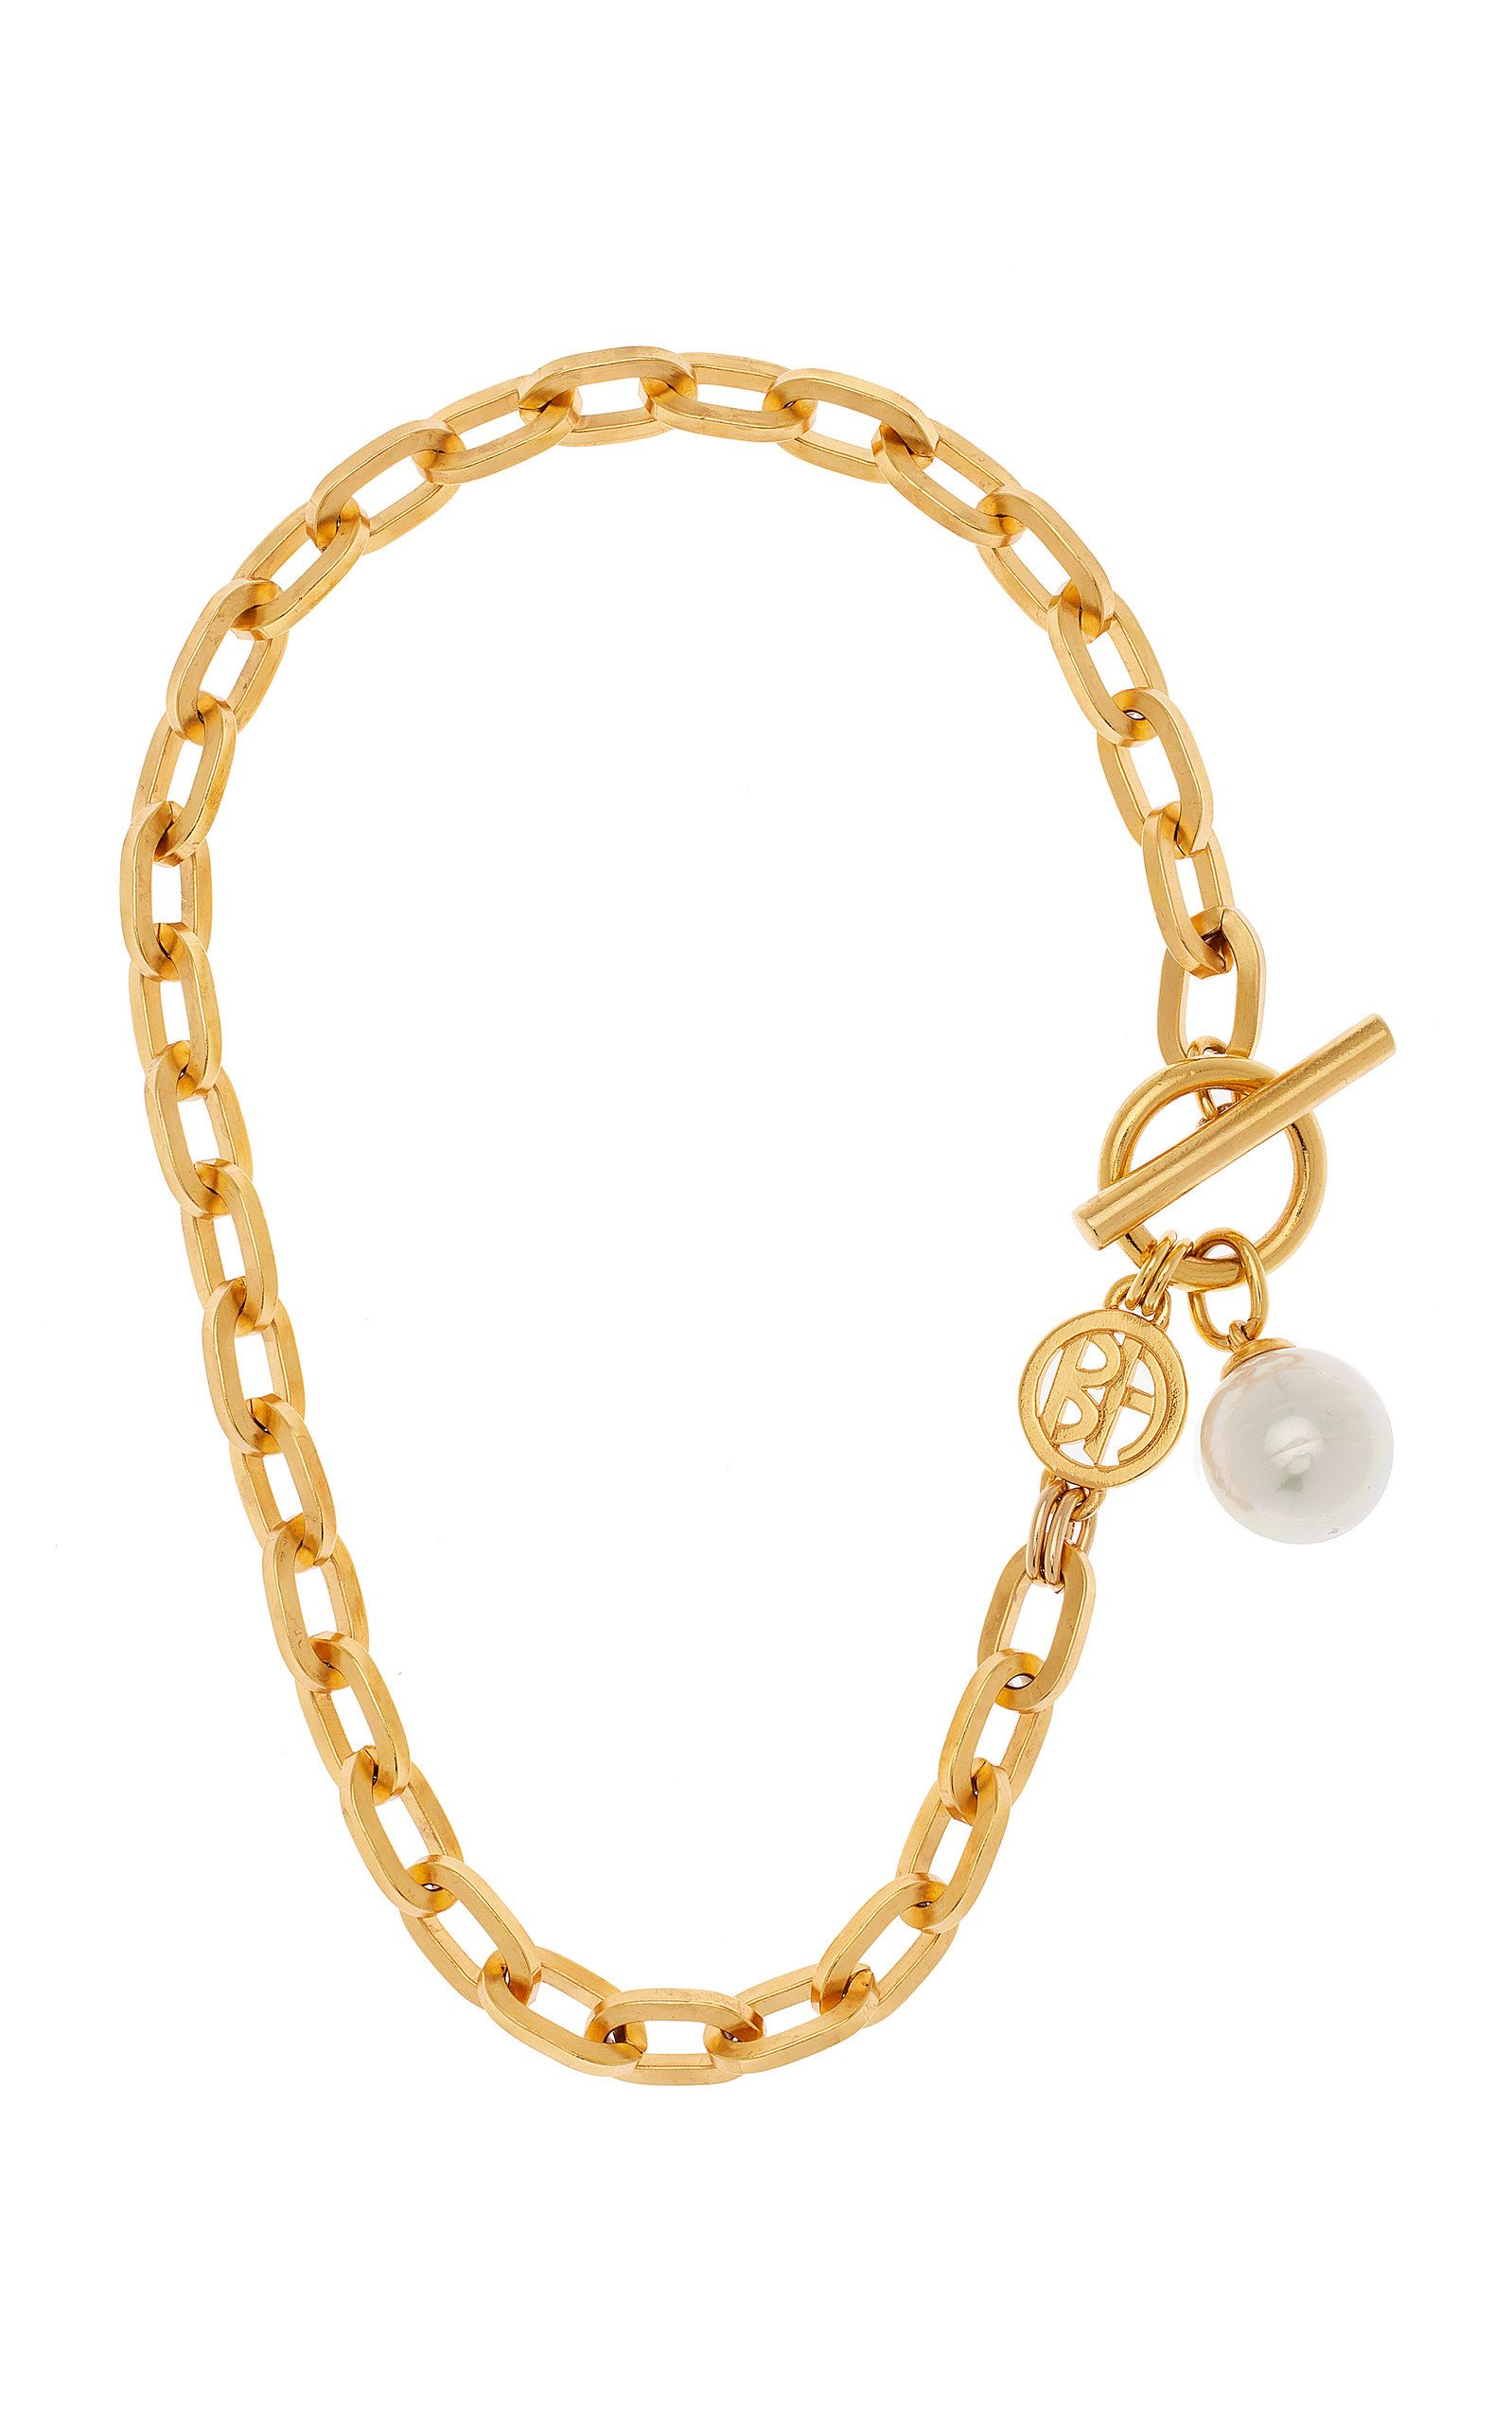 Ben-Amun - Women's Pearl Gold-Plated Chain Necklace - Gold - Moda Operandi - Gifts For Her | Moda Operandi (Global)